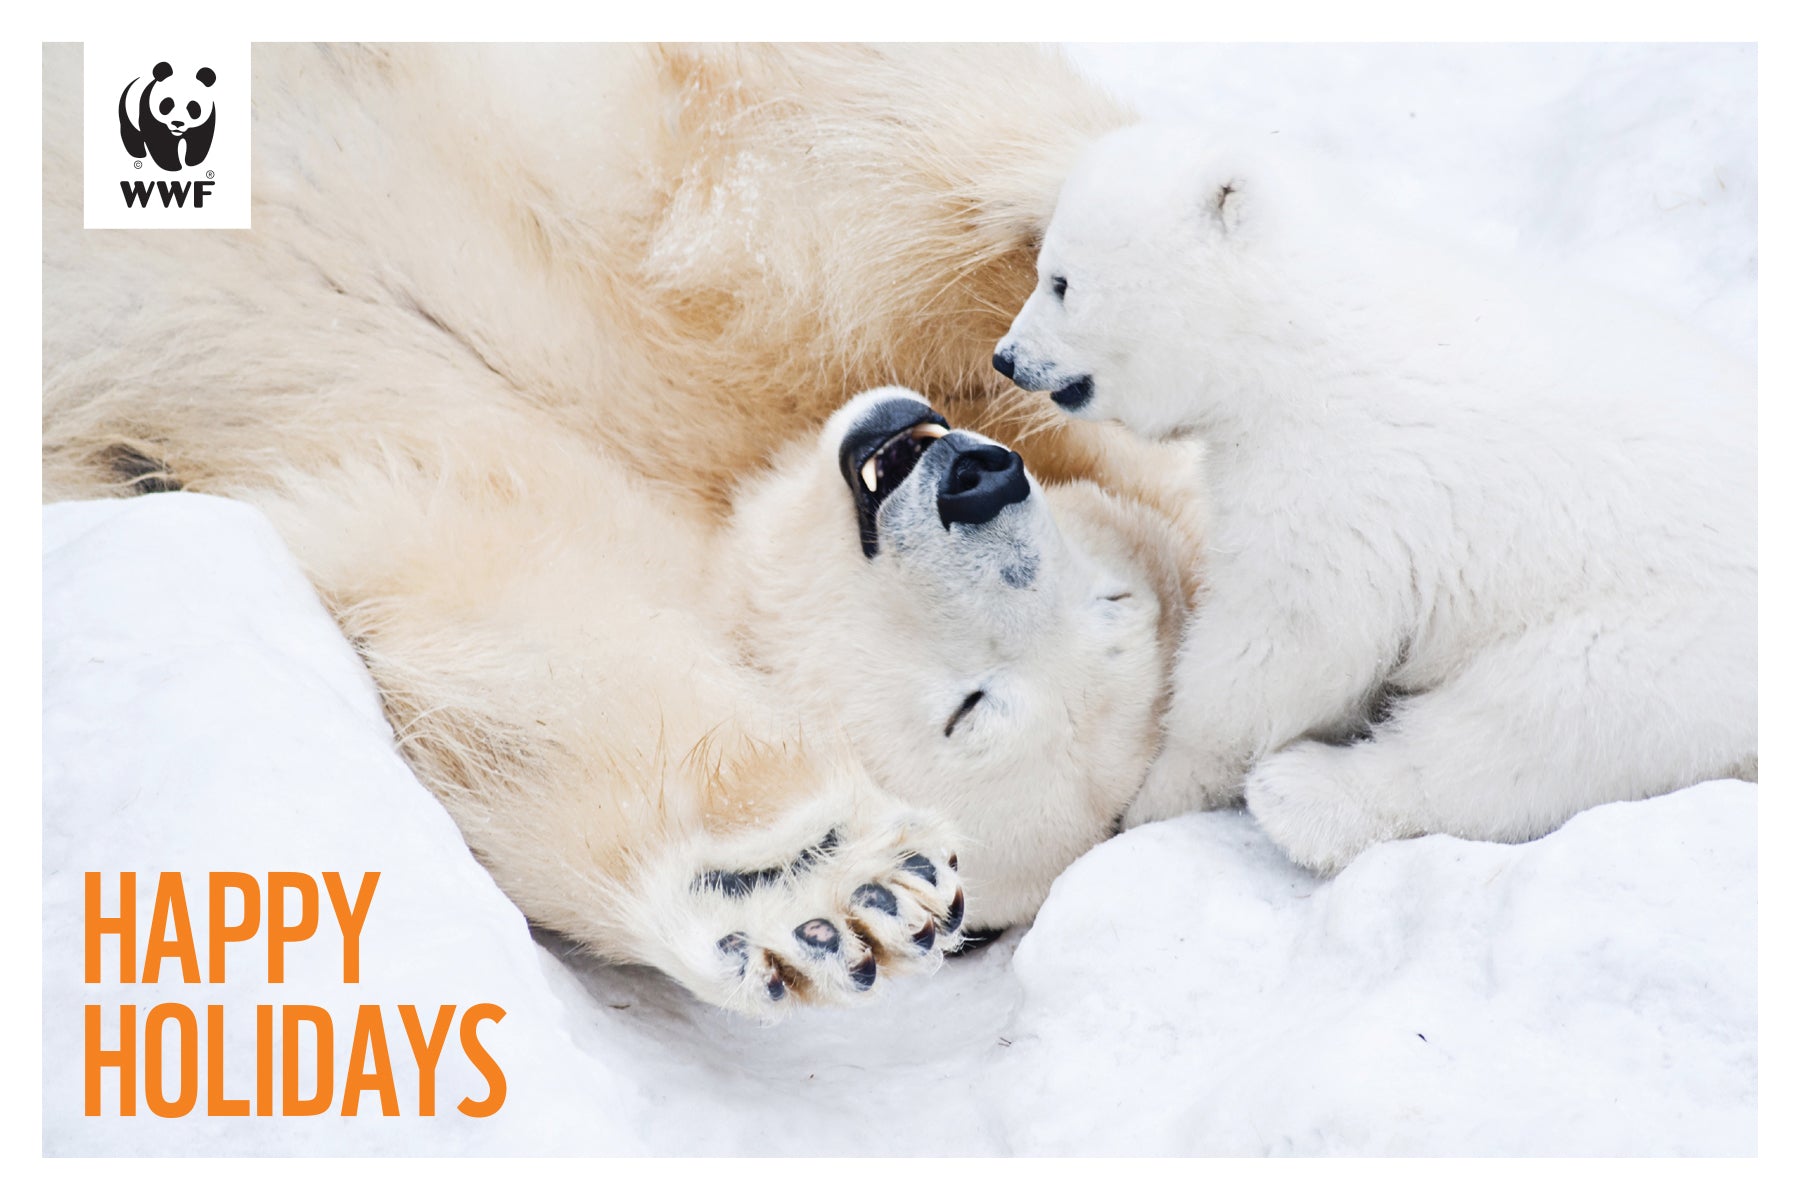 Holiday greeting card - polar bear image. "Happy holidays"